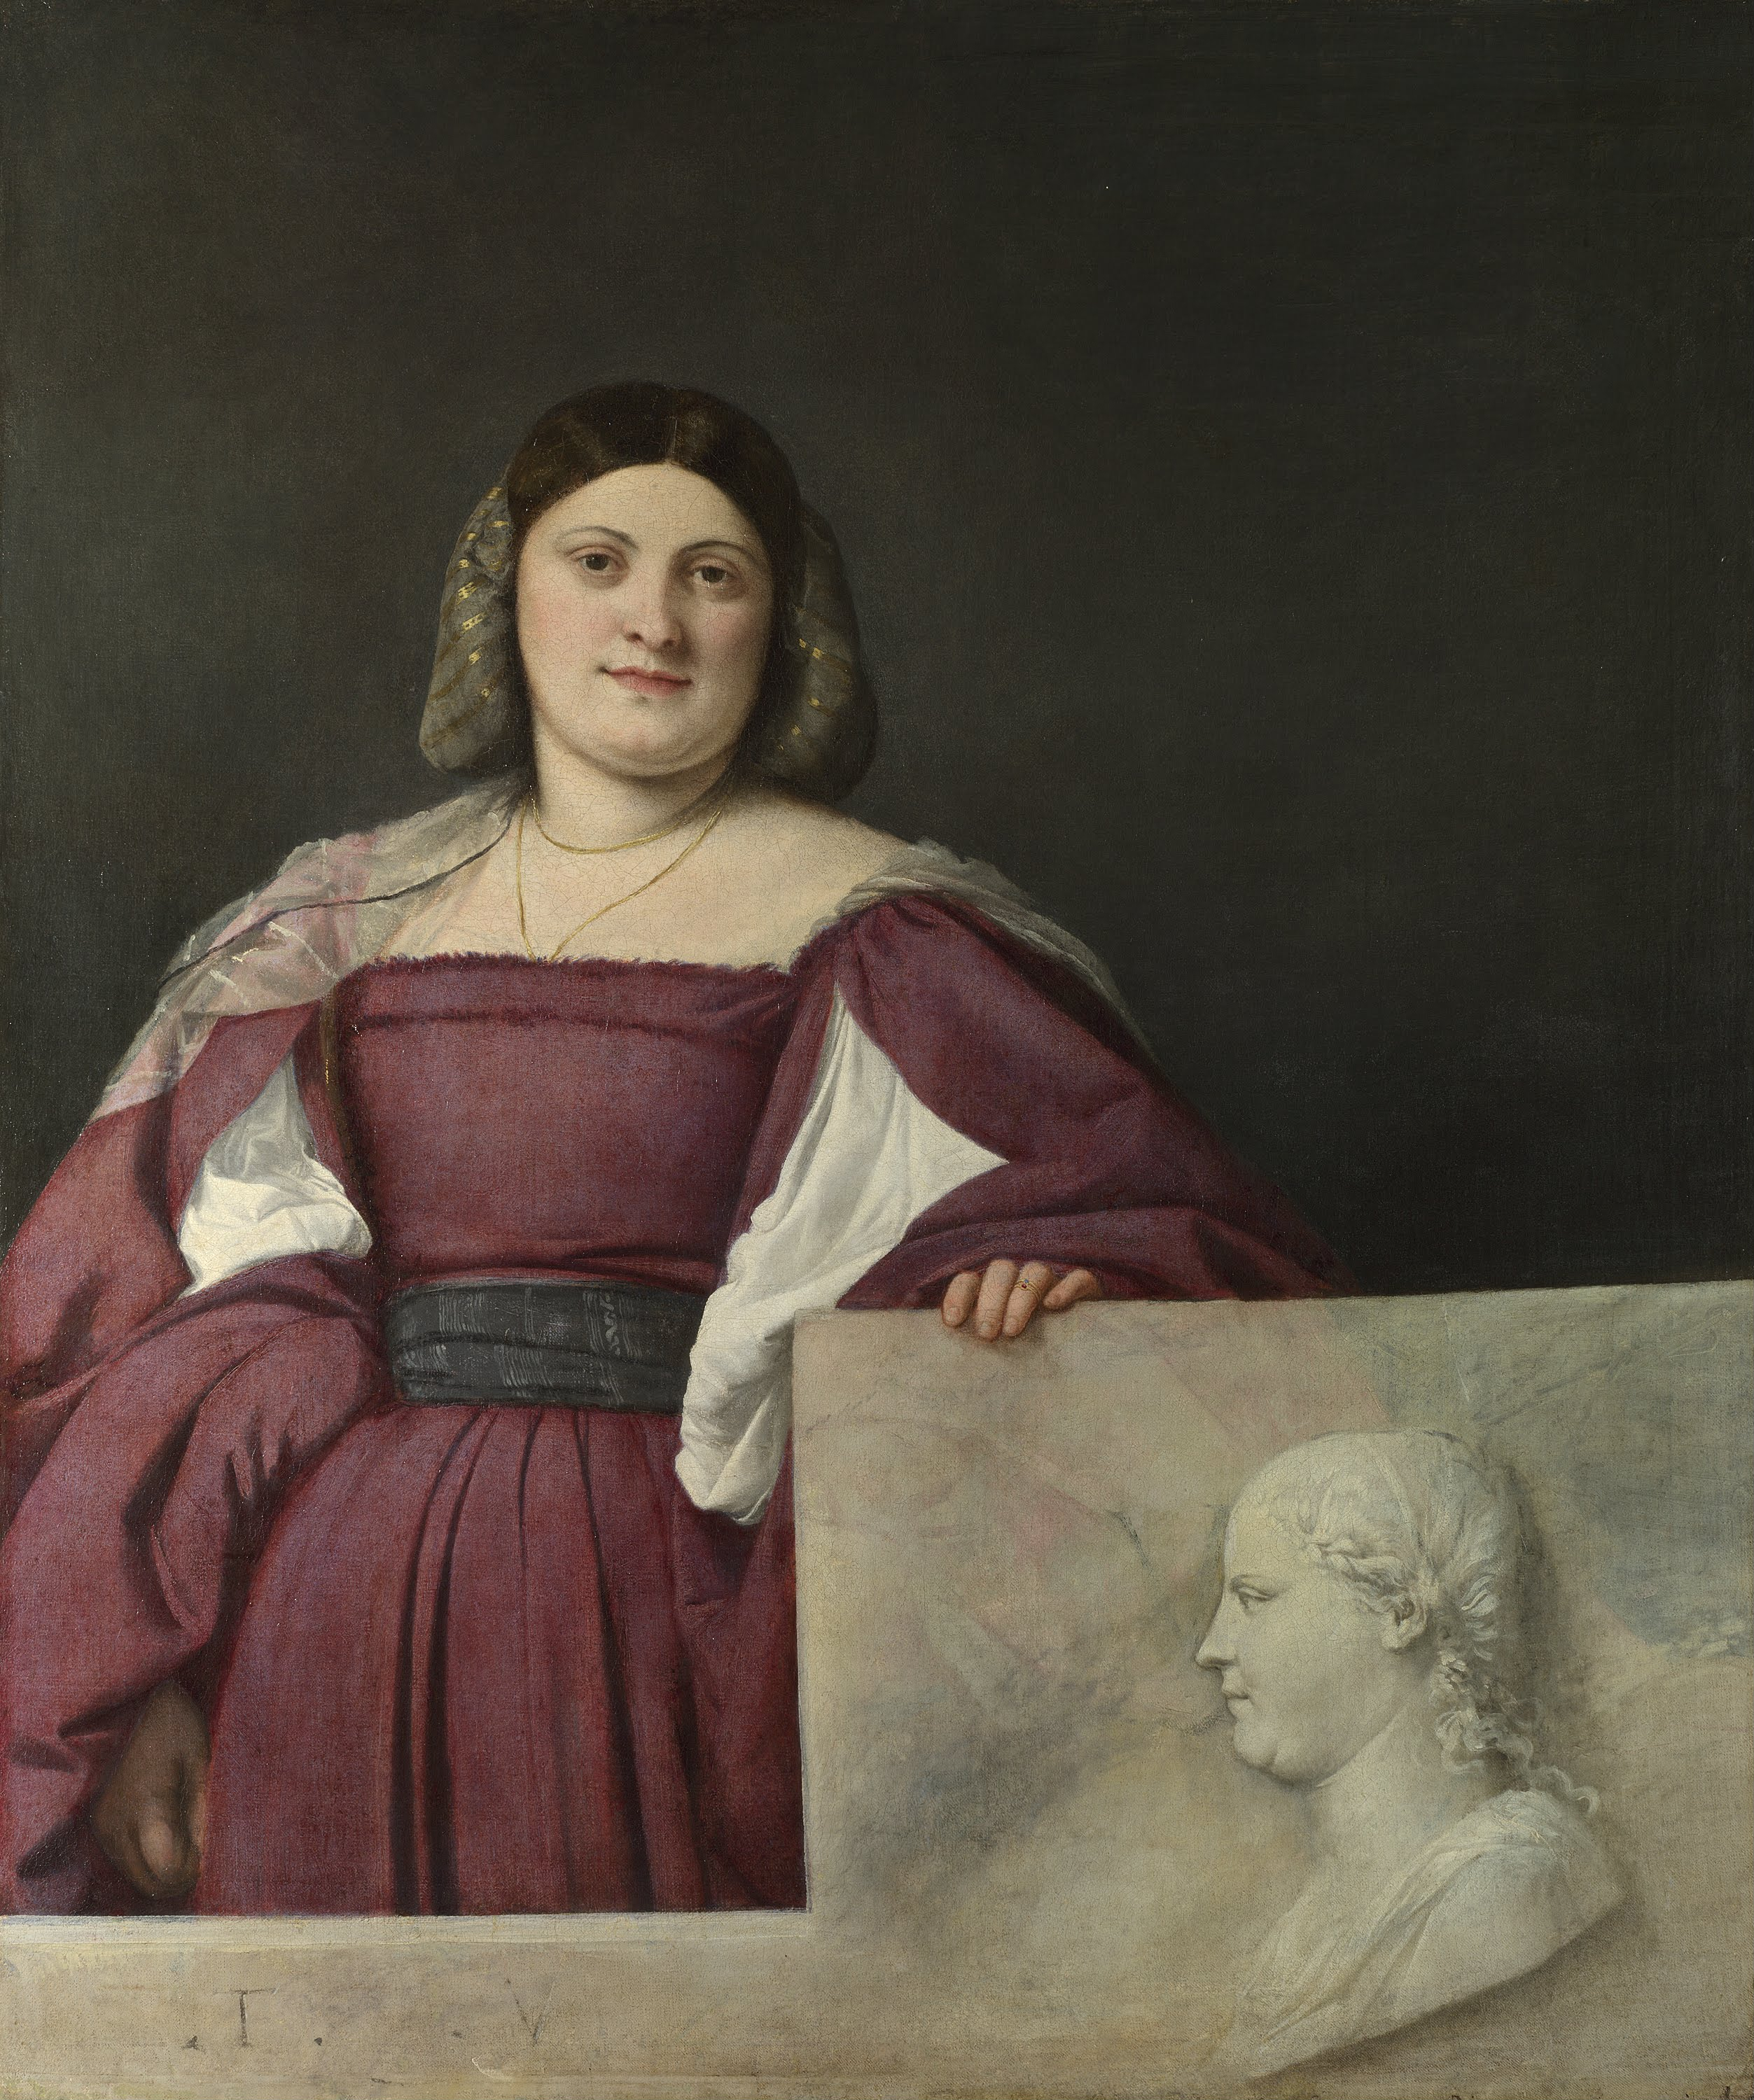 Portrait of a Lady (La Schiavona) by  Titian - about 1510-12 - 119.4 x 96.5 cm National Gallery